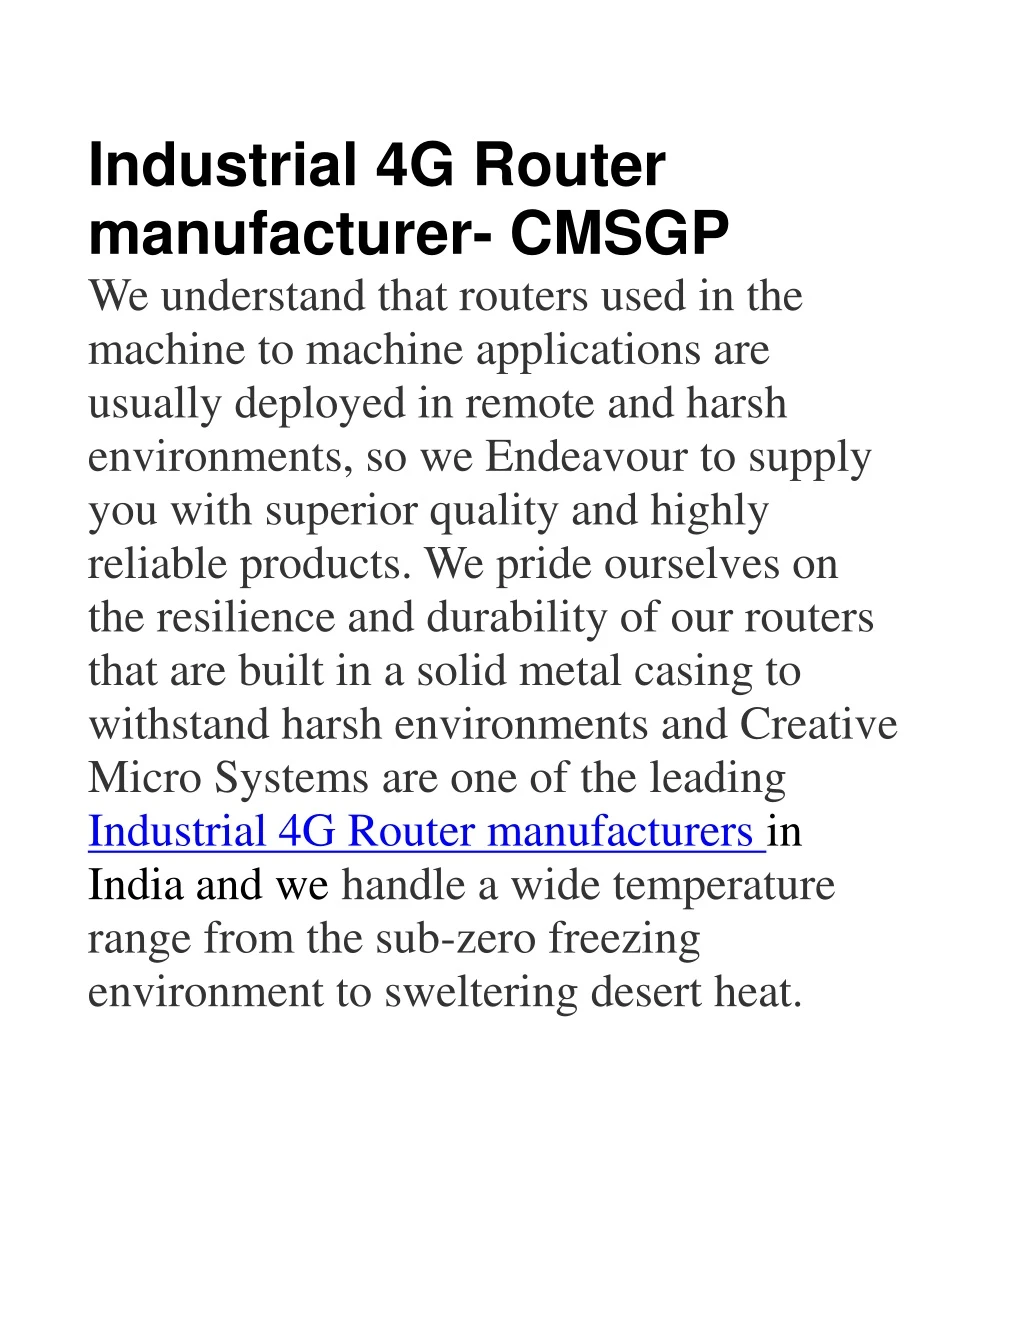 industrial 4g router manufacturer cmsgp